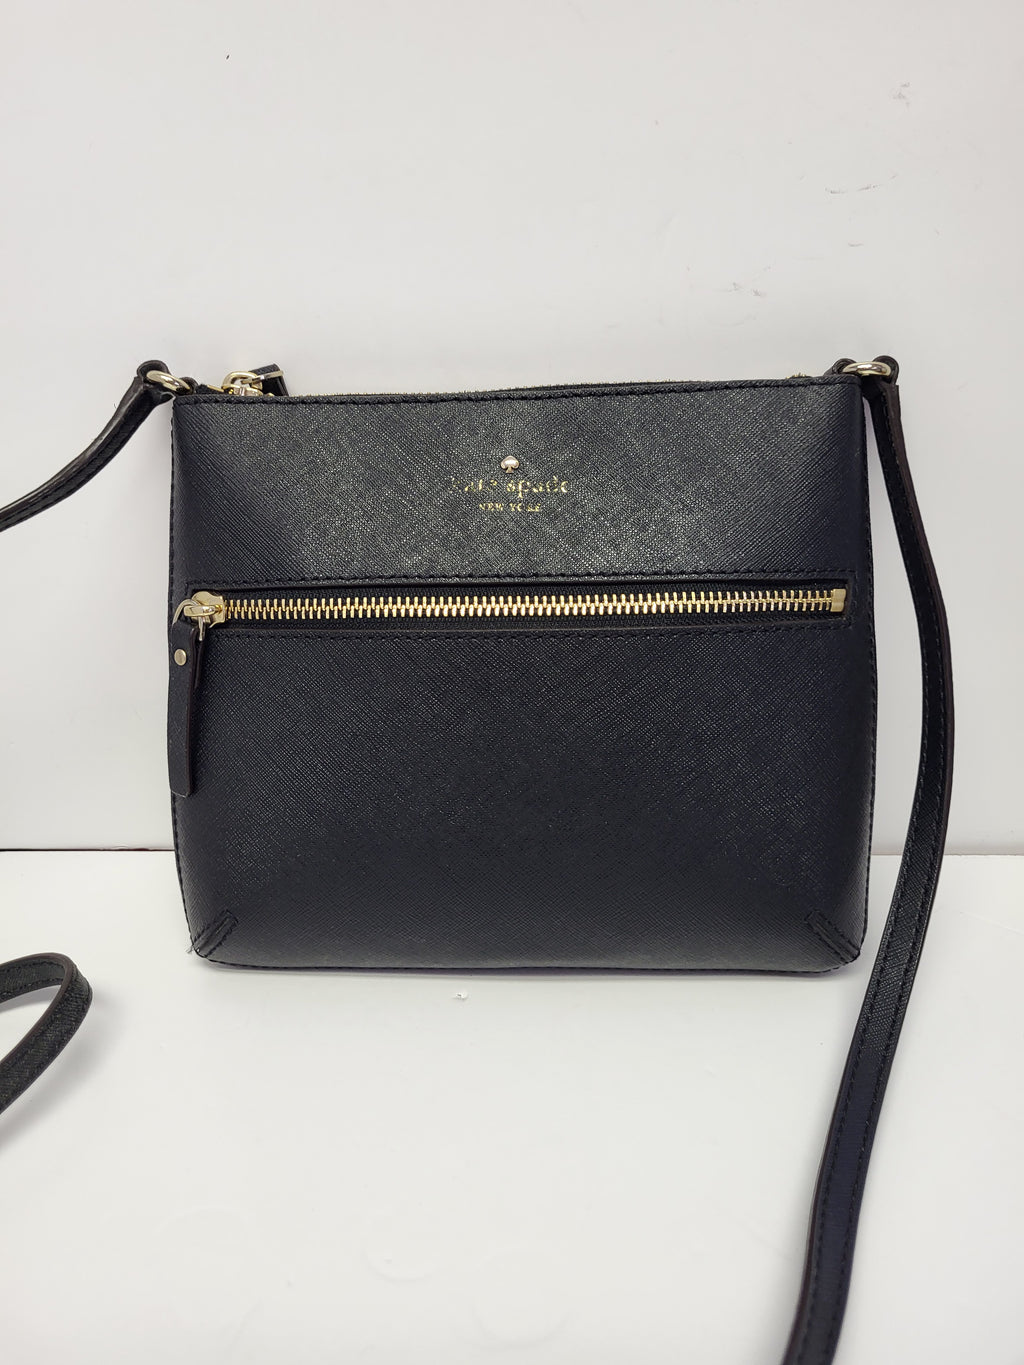 Kate Spade Black Saffiano Leather Side Bag